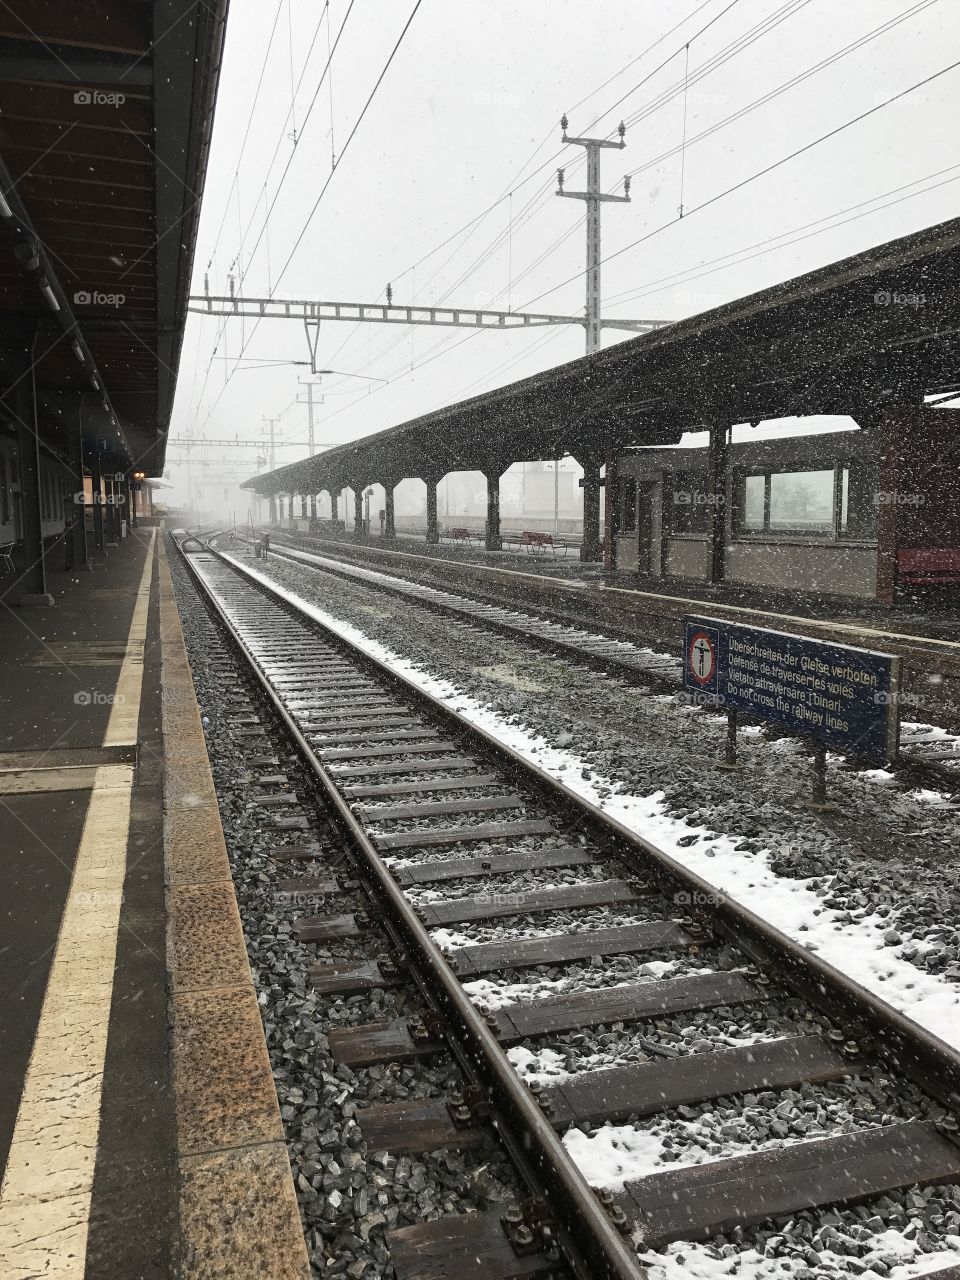 Snowy railroad tracks in Europe. 